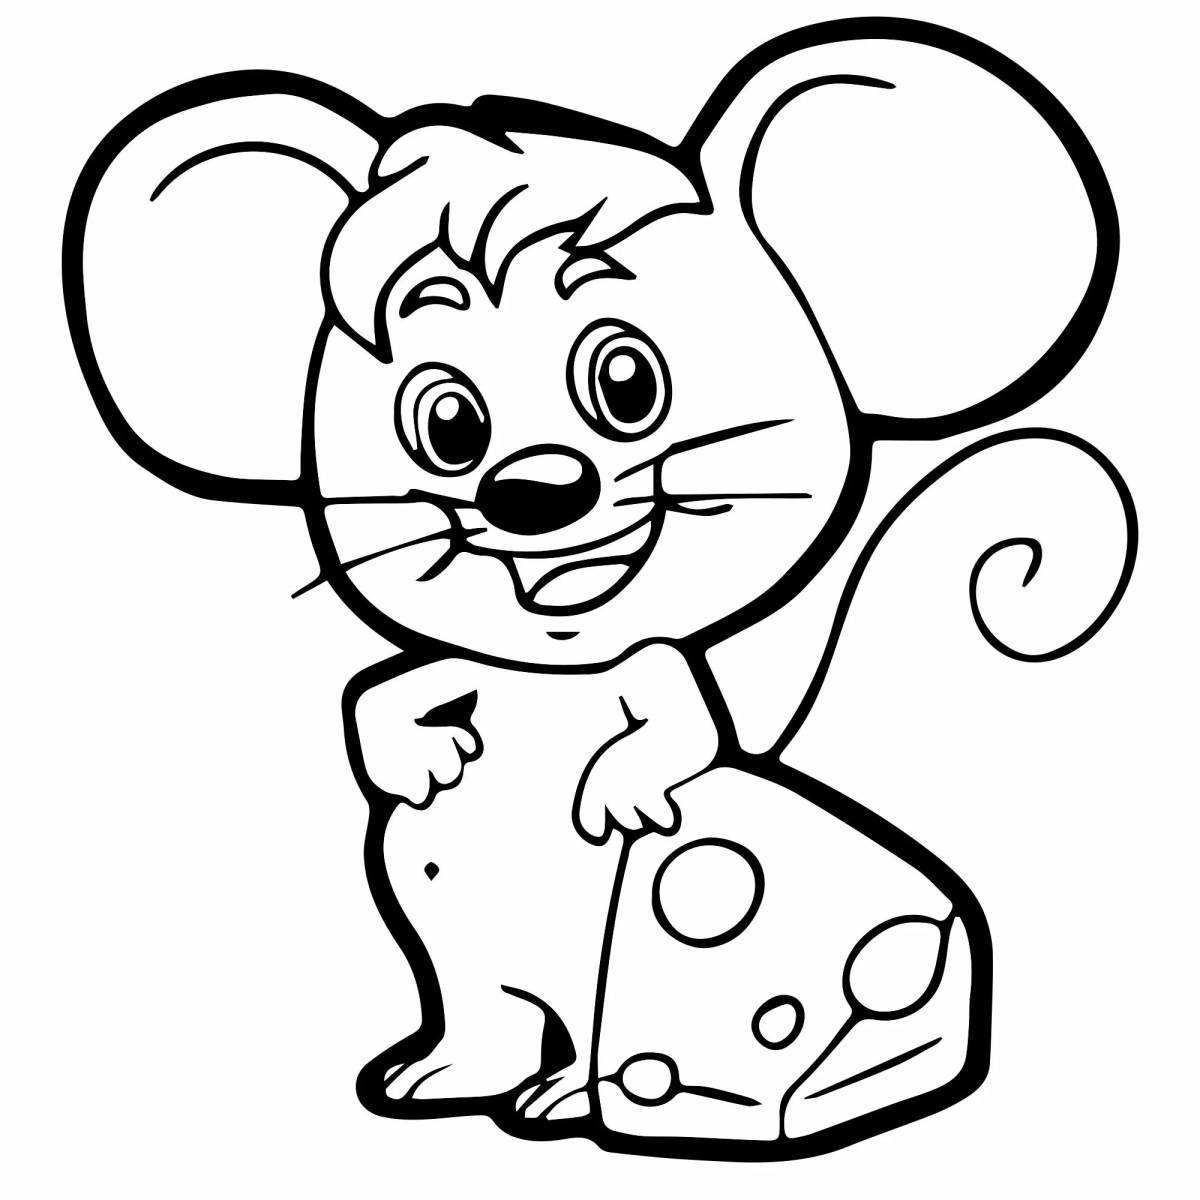 Color-crazy mouse раскраски для детей